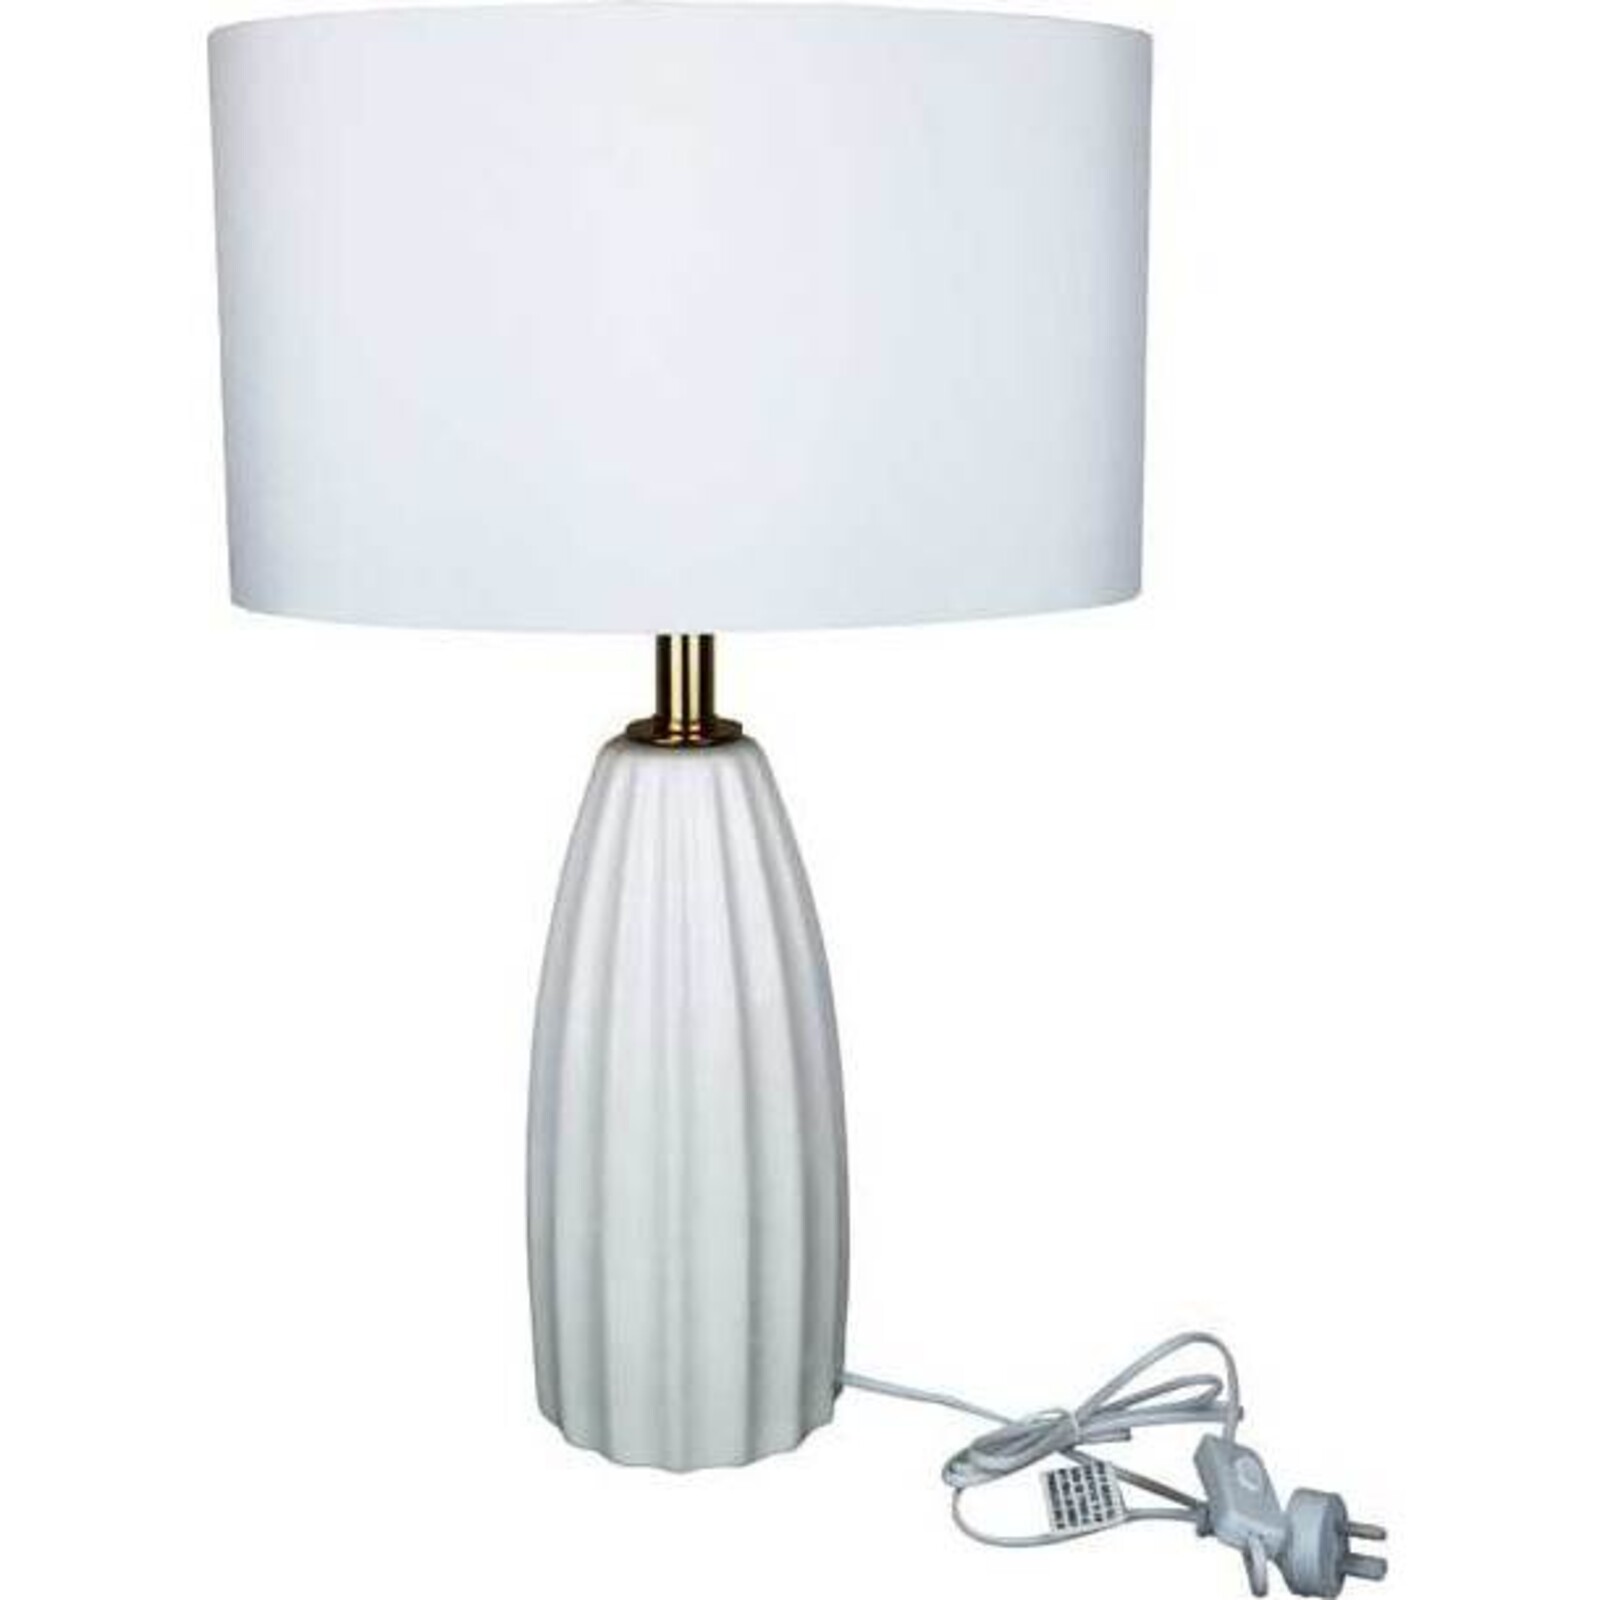 Lamp Cacto White